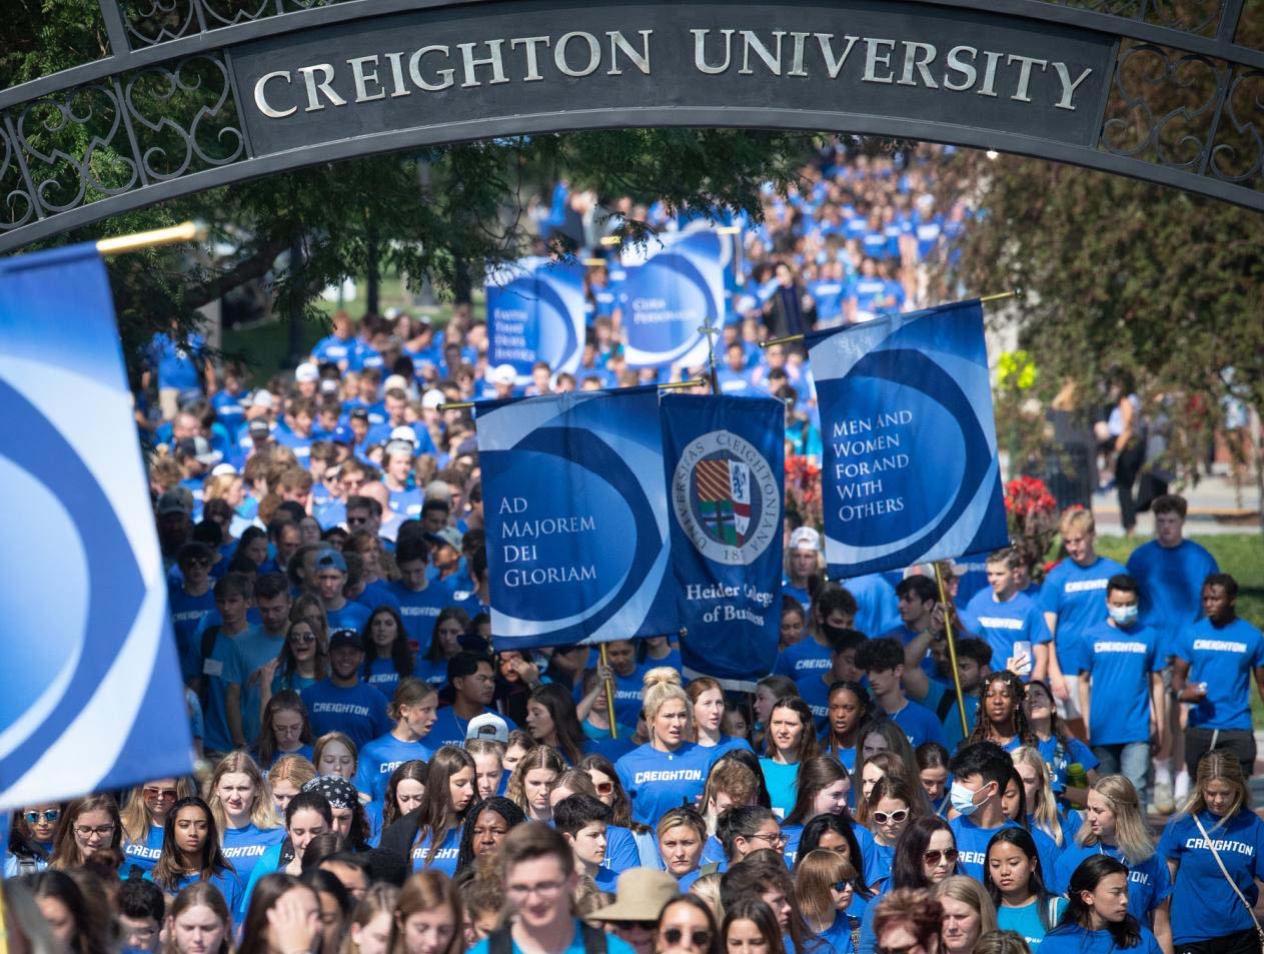 Students walking in mass under Creighton University gate -- all wearing Creighton blue t-shirts.